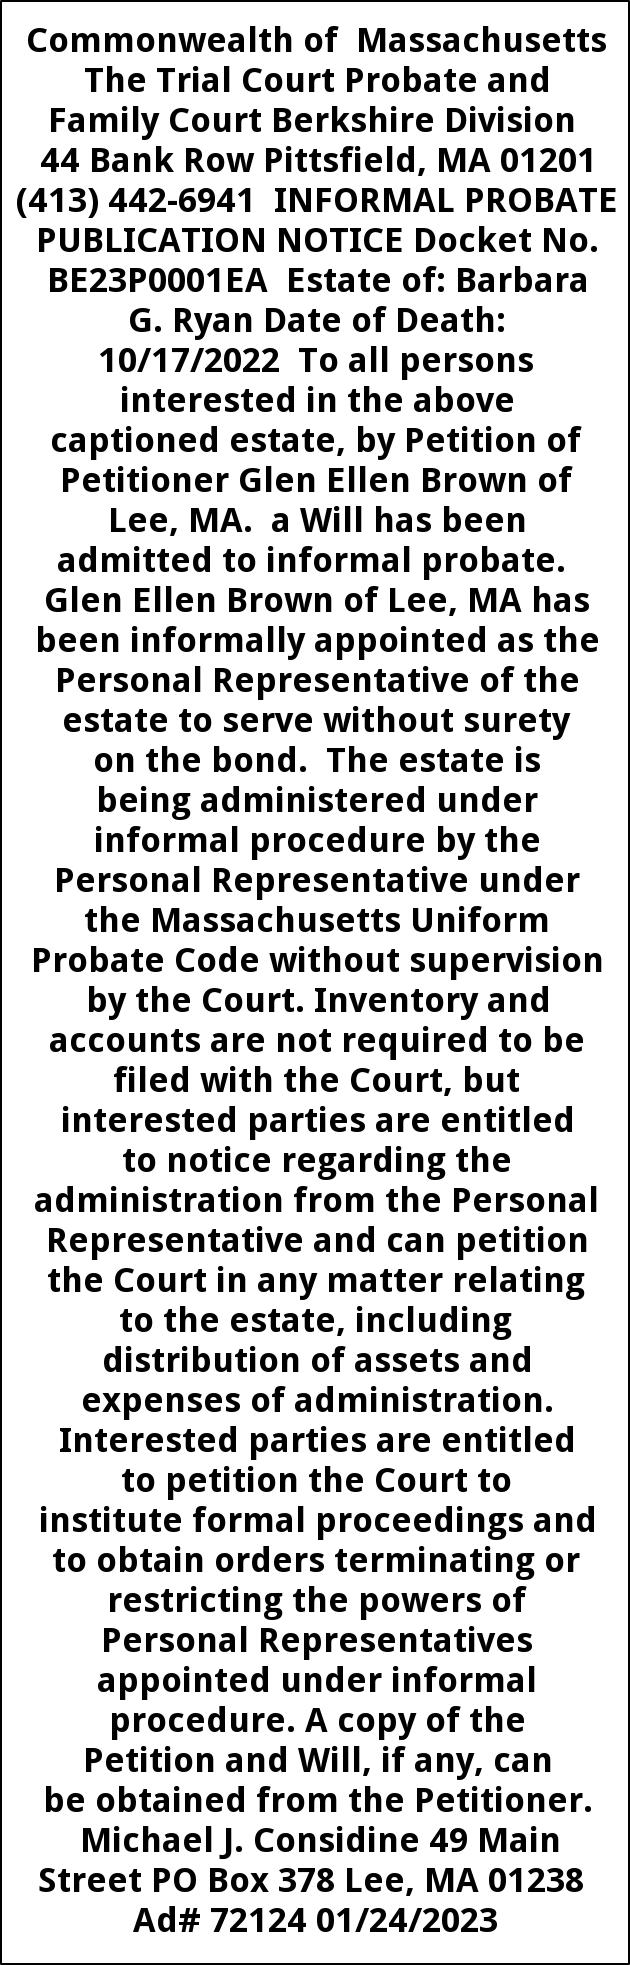 Informal Probate Publication Notice